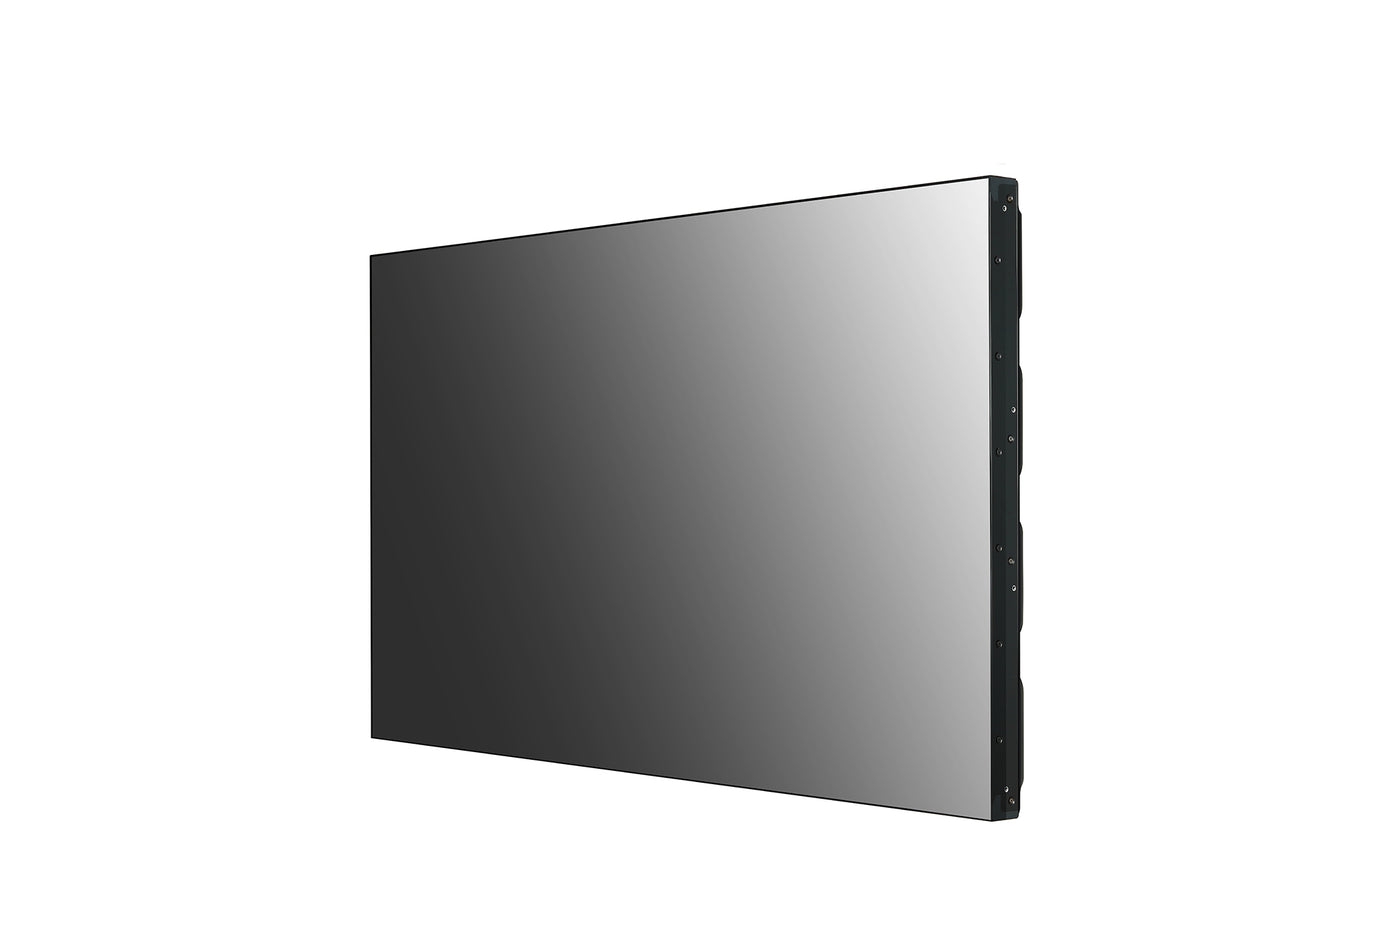 LG 49VL5G-M 49"  FHD Slim Bezel Video Wall Tilted Left View